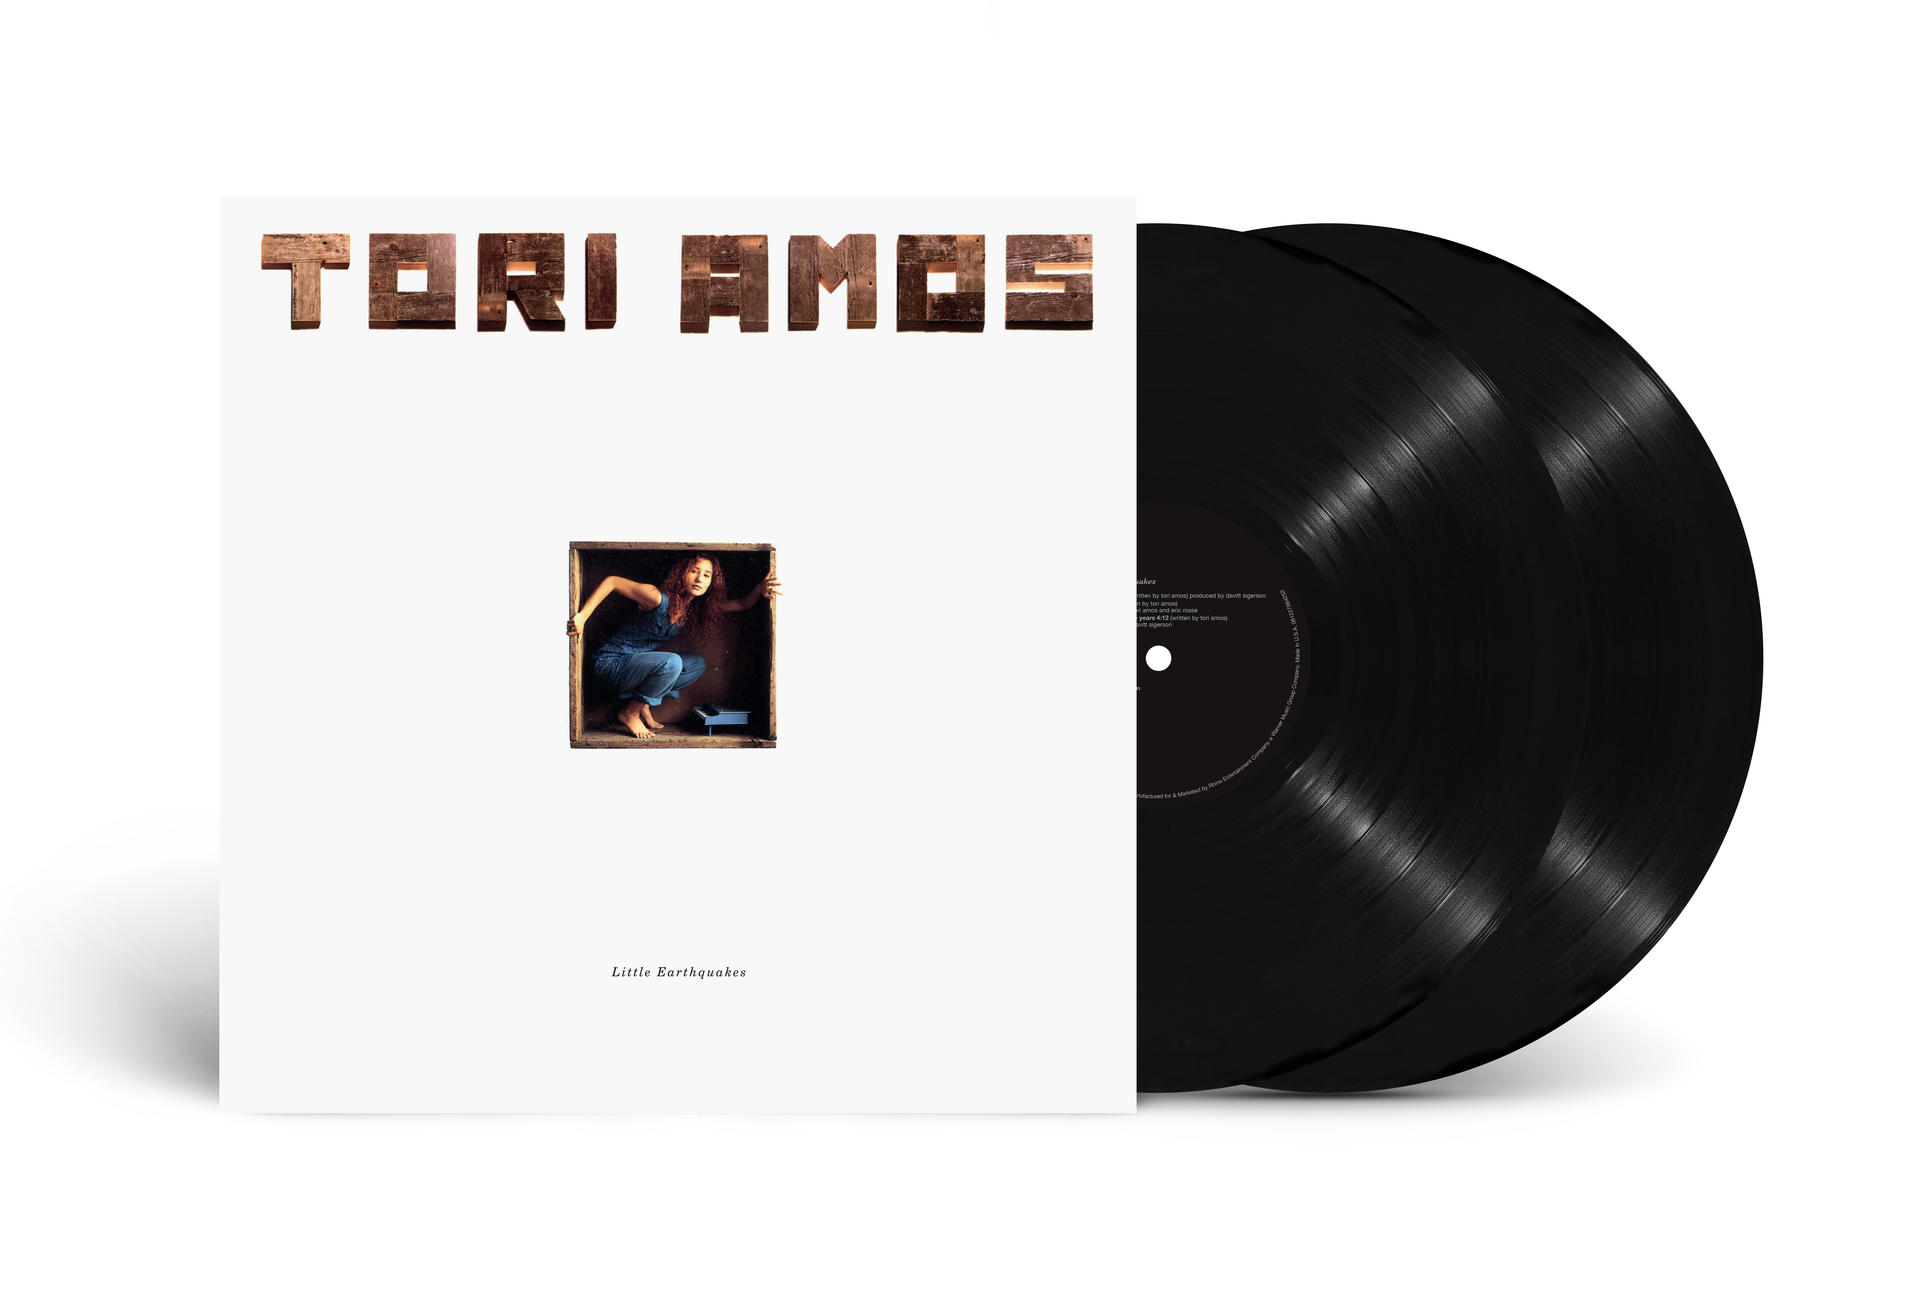 Tori Amos - - Earthquakes Little (Vinyl)